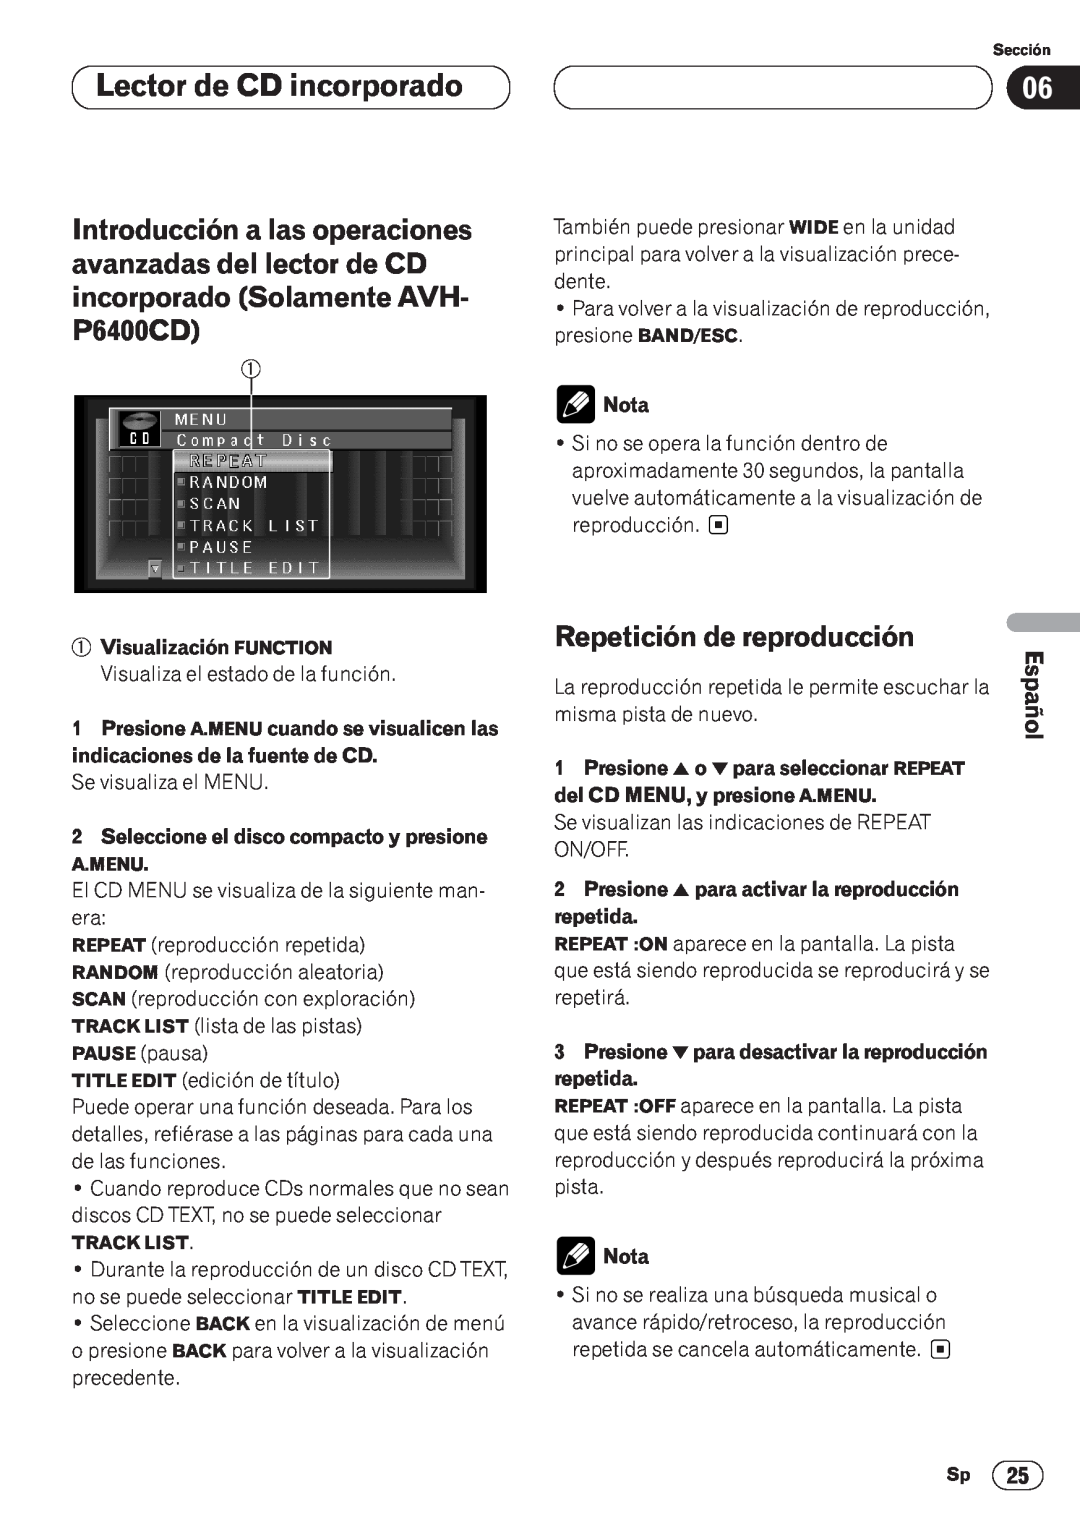 Pioneer AVH-P6400CD operation manual Lector de CD incorporado, Repetición de reproducción, Español, English, Nota, repetida 